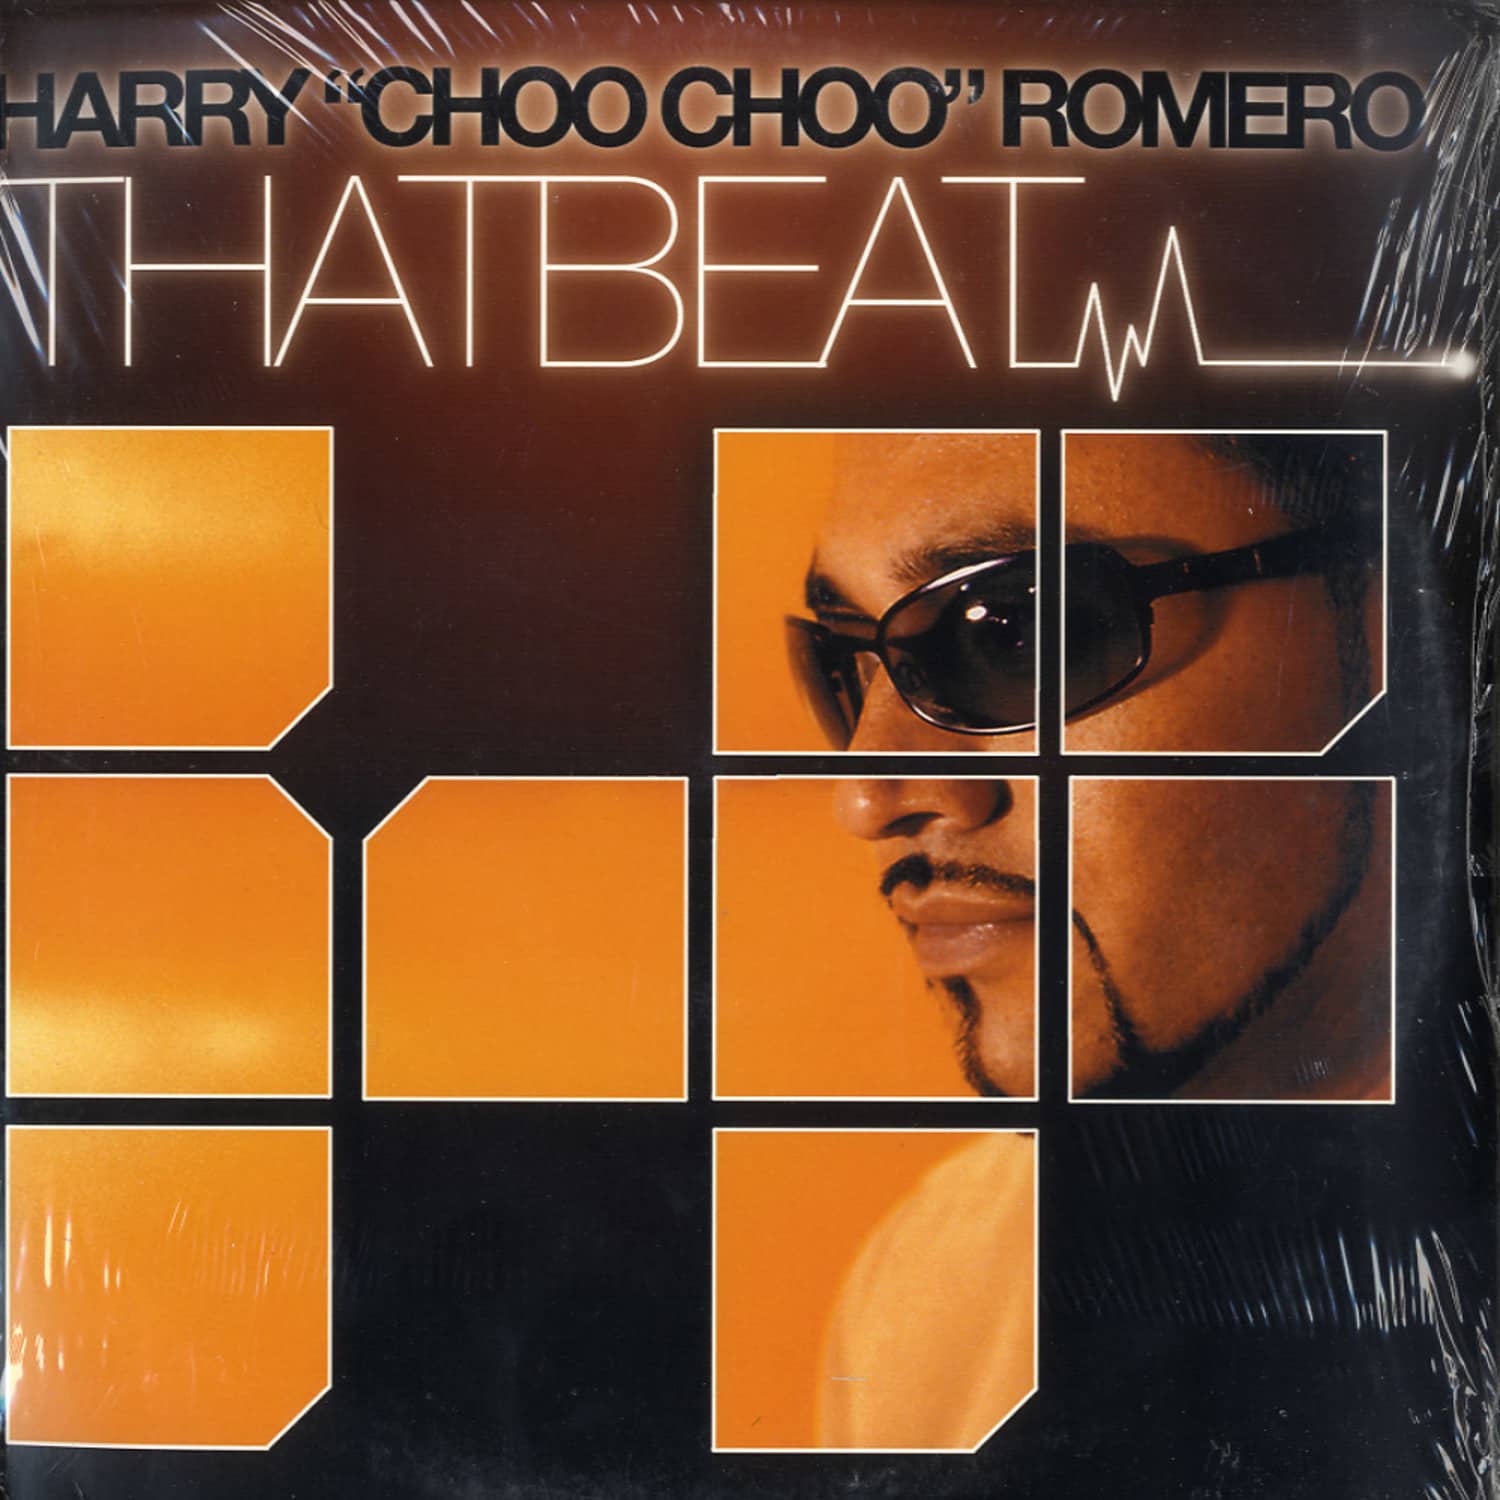 Harry Choo Choo Romero - THATBEAT 